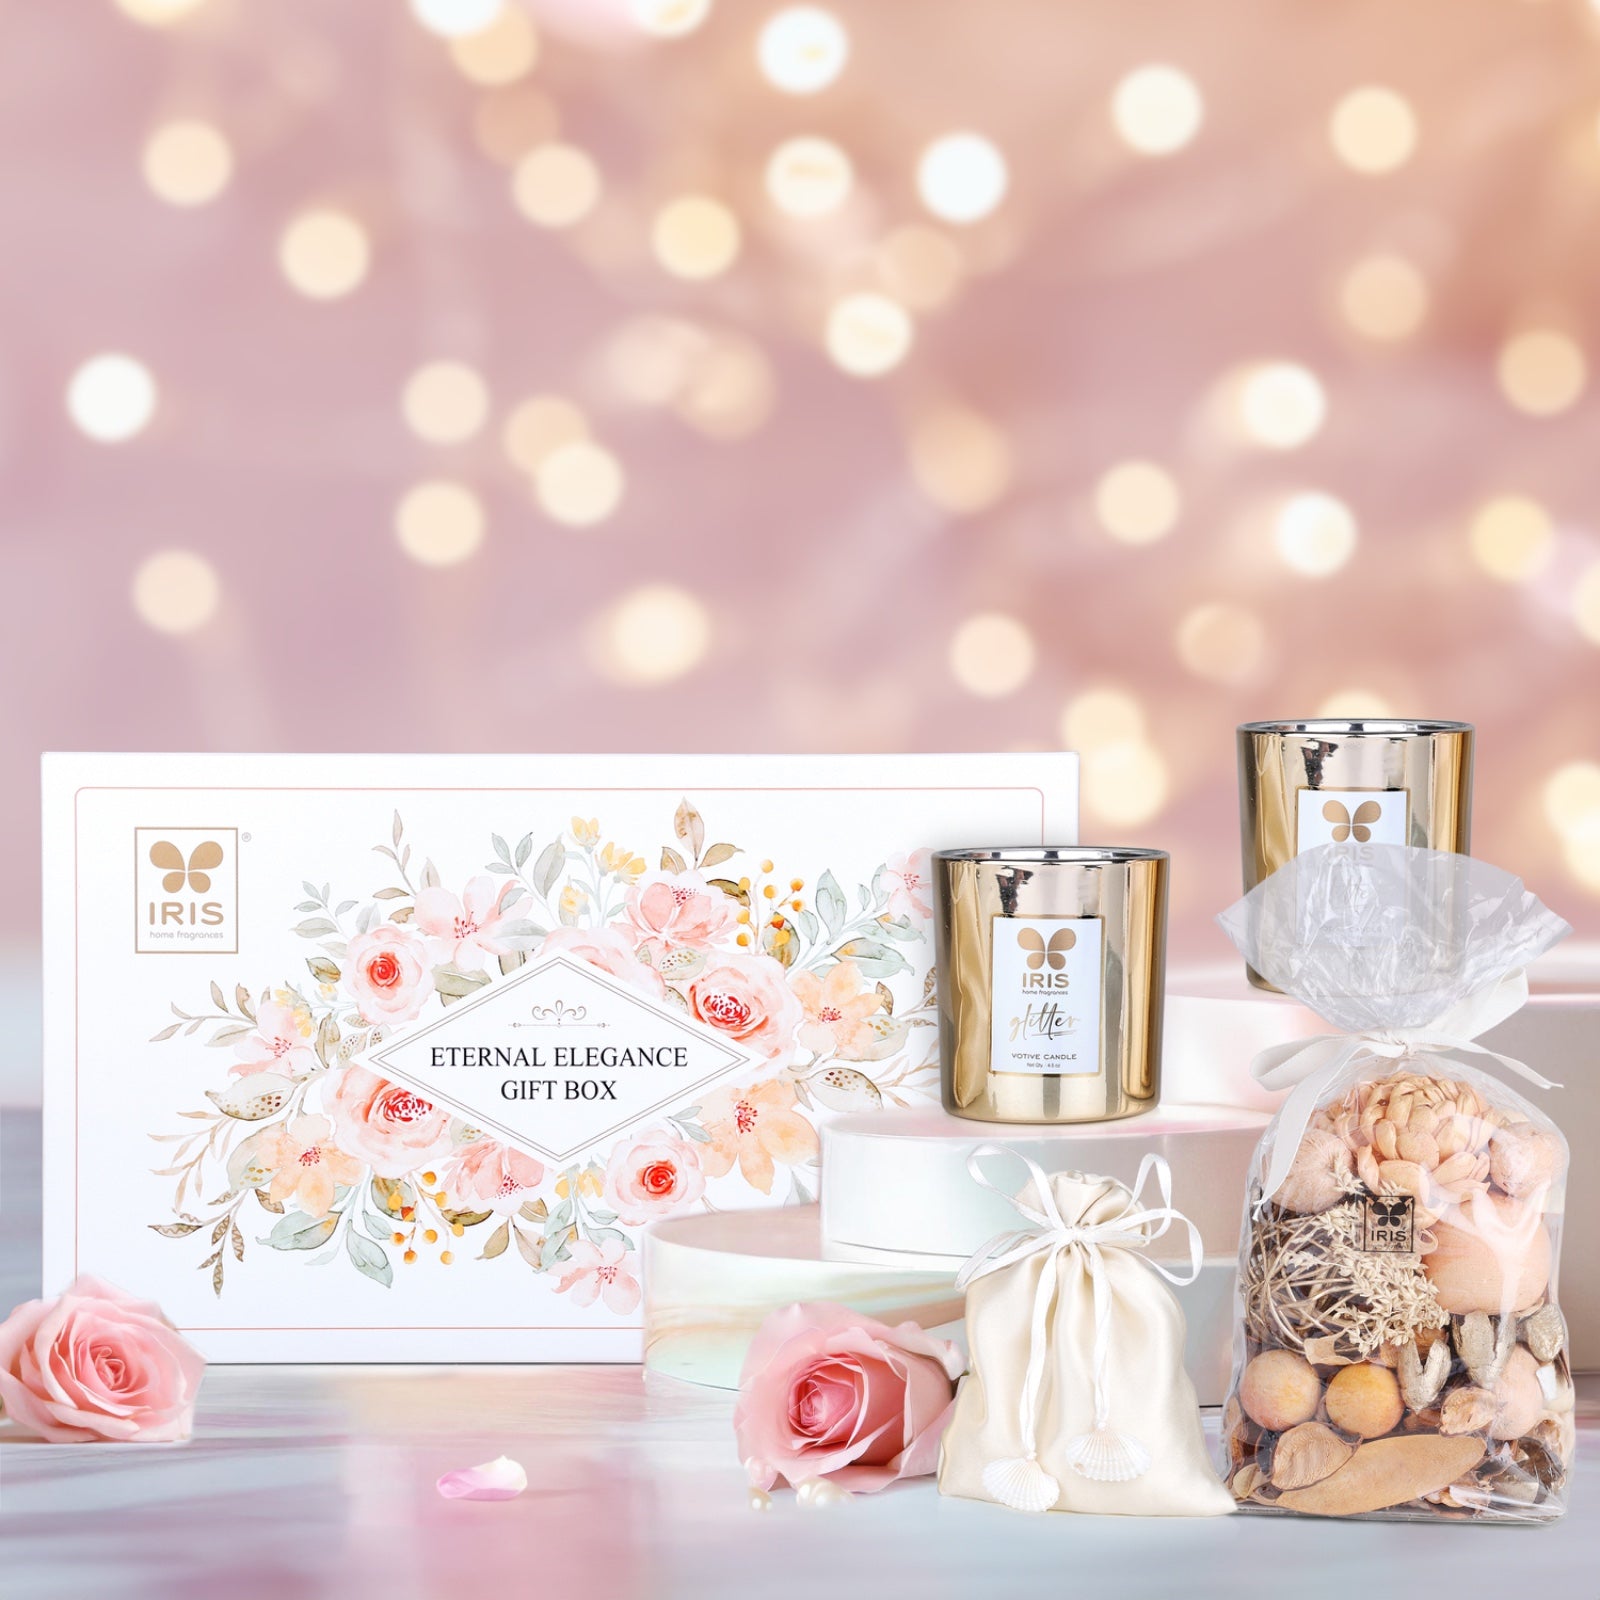 IRIS Eternal Elegance Gift Box